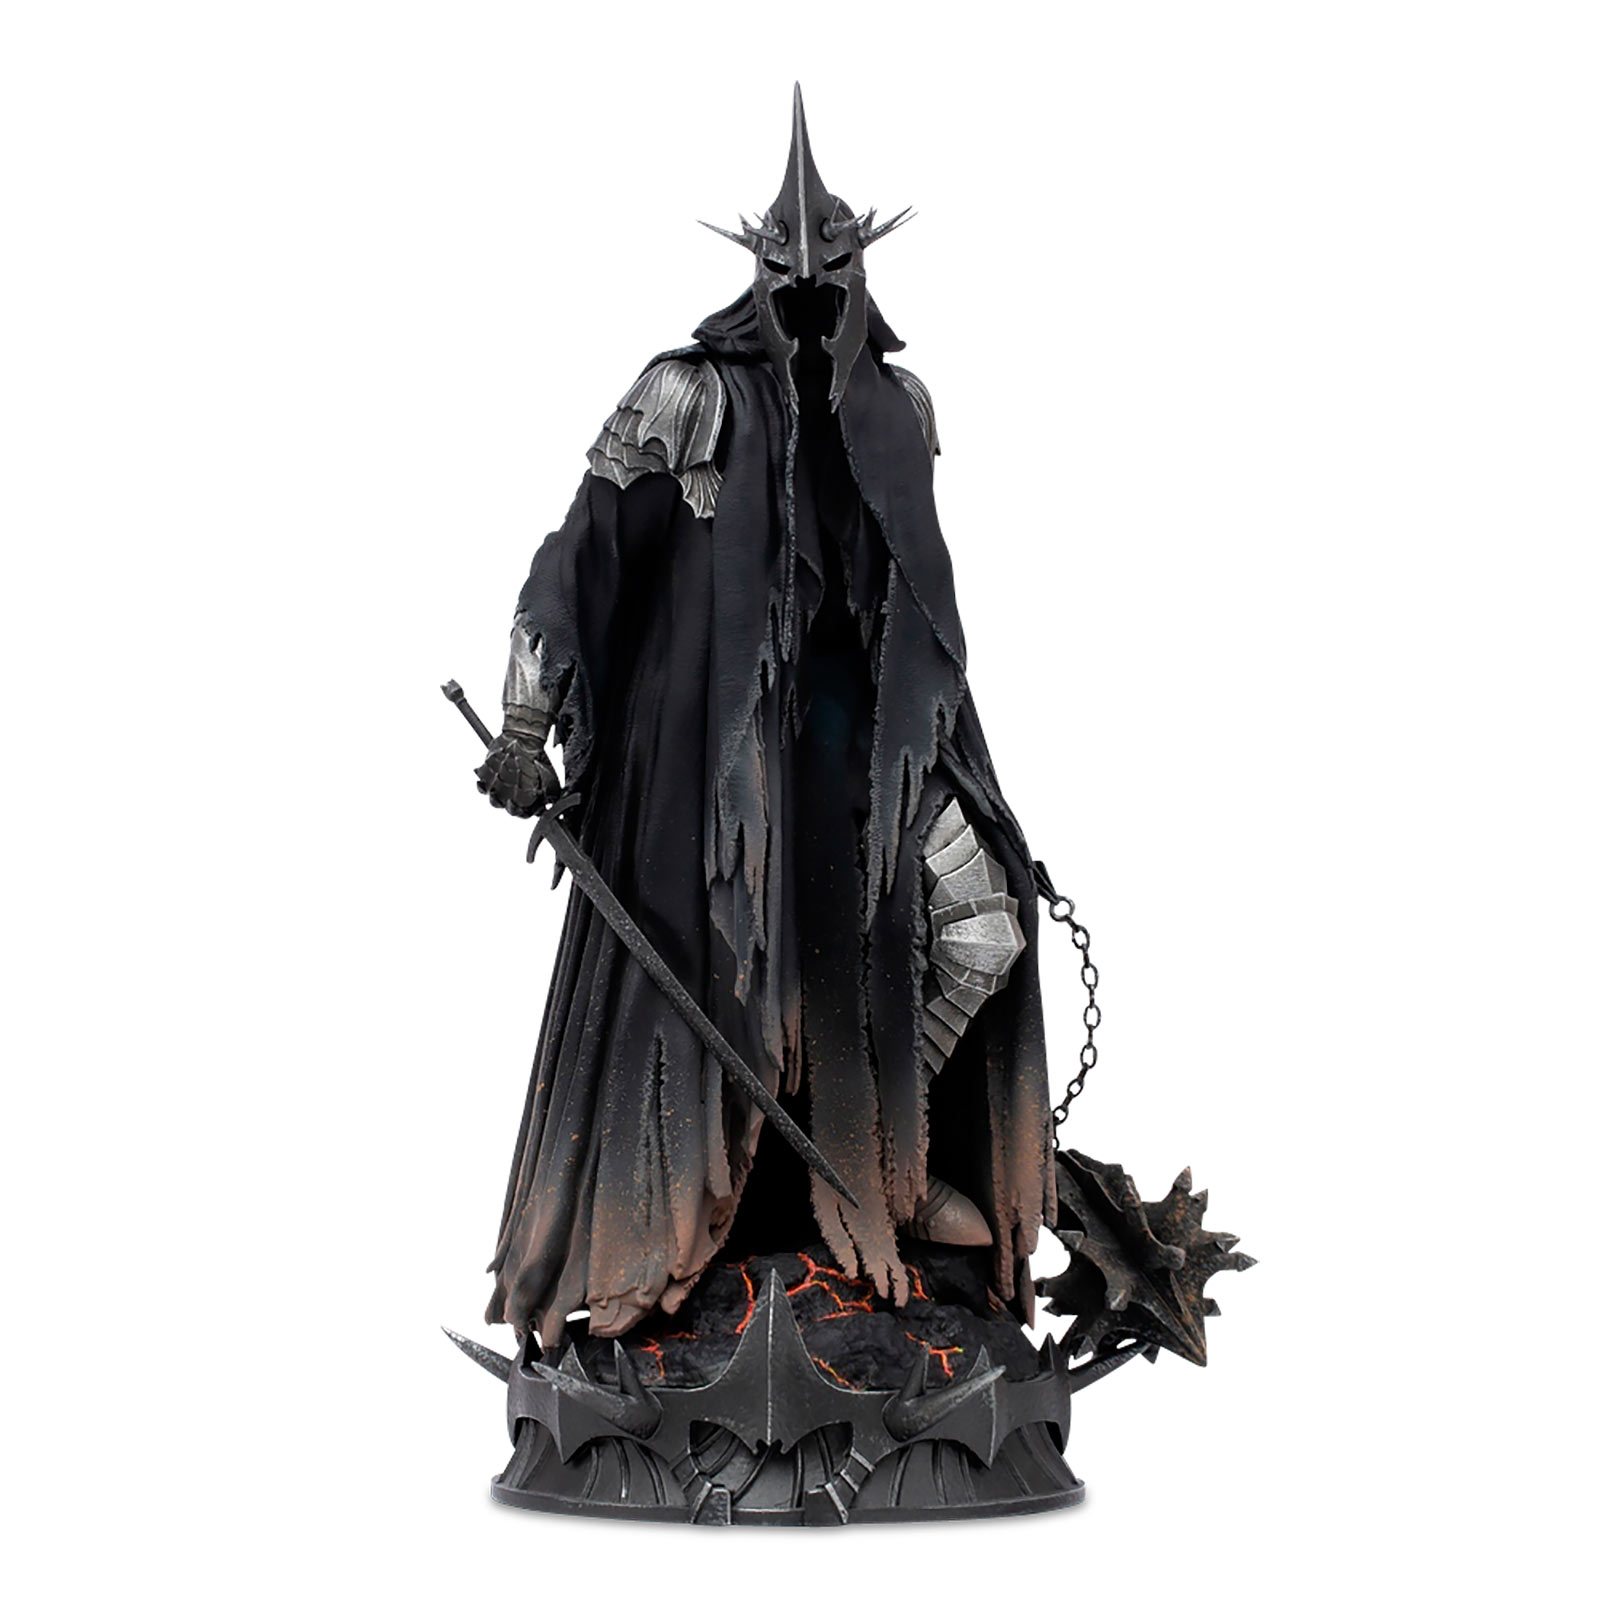 Herr der Ringe - Hexenkönig von Angmar Saga BDS Art Scale Deluxe Statue